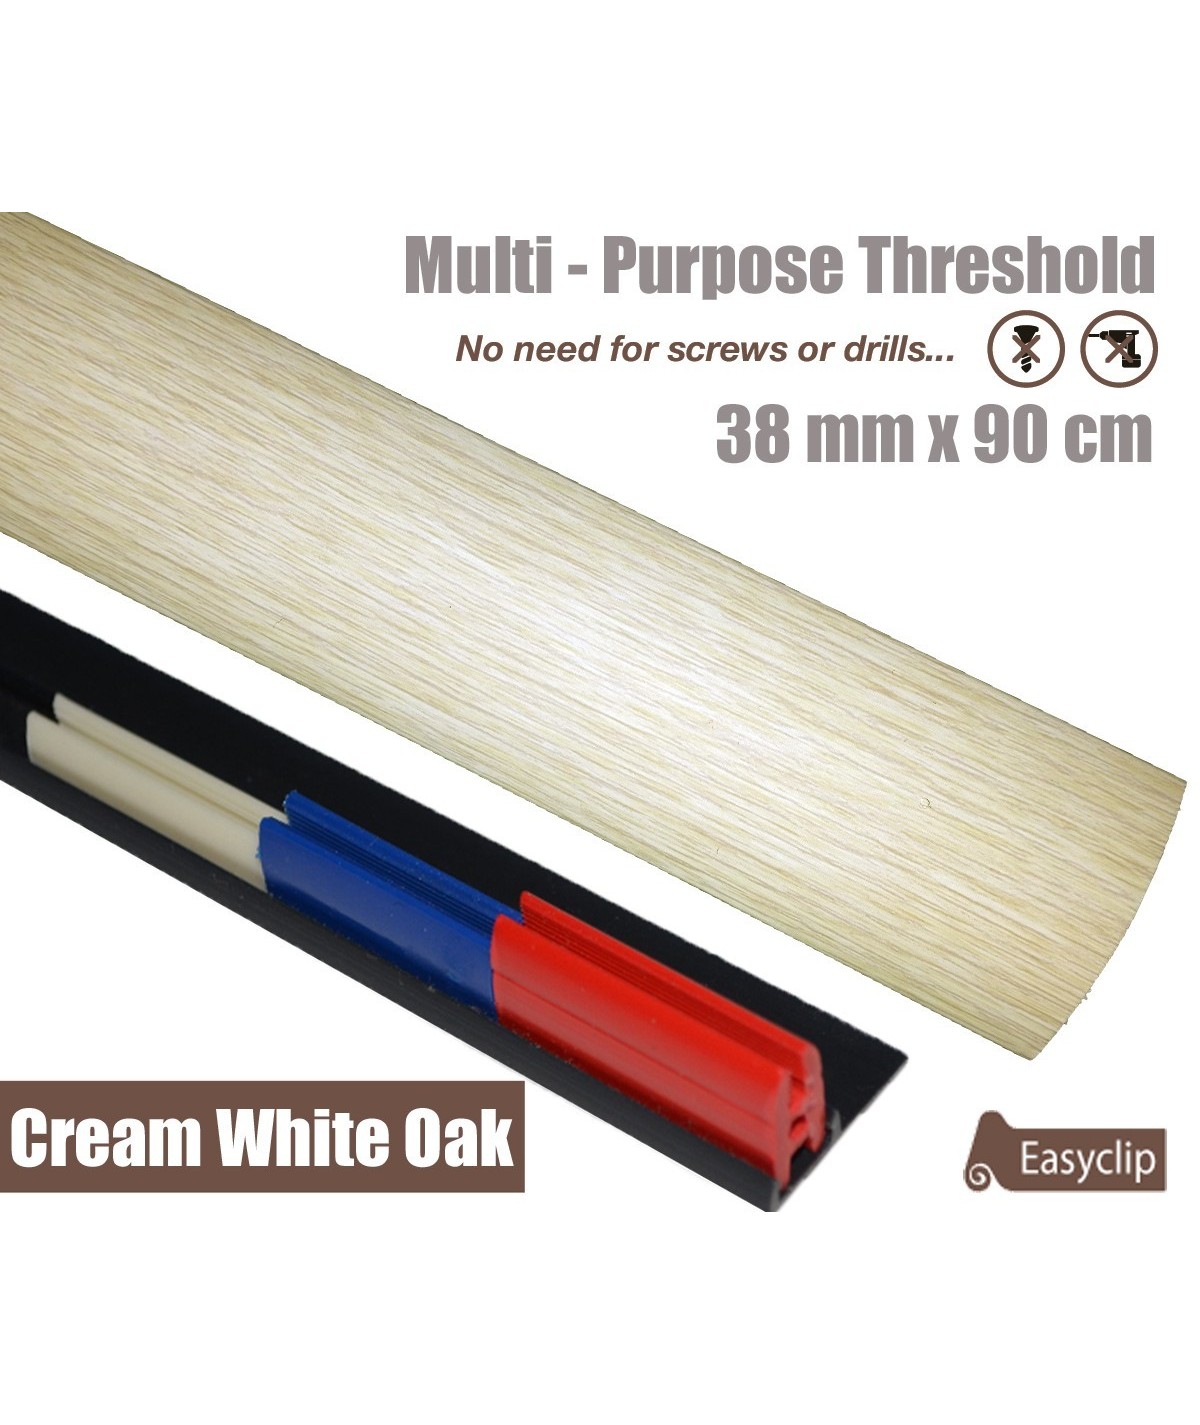 Cream White Oak Threshold Strip 38mm x 90cm laminate multi Purpose Adhesive Clip System